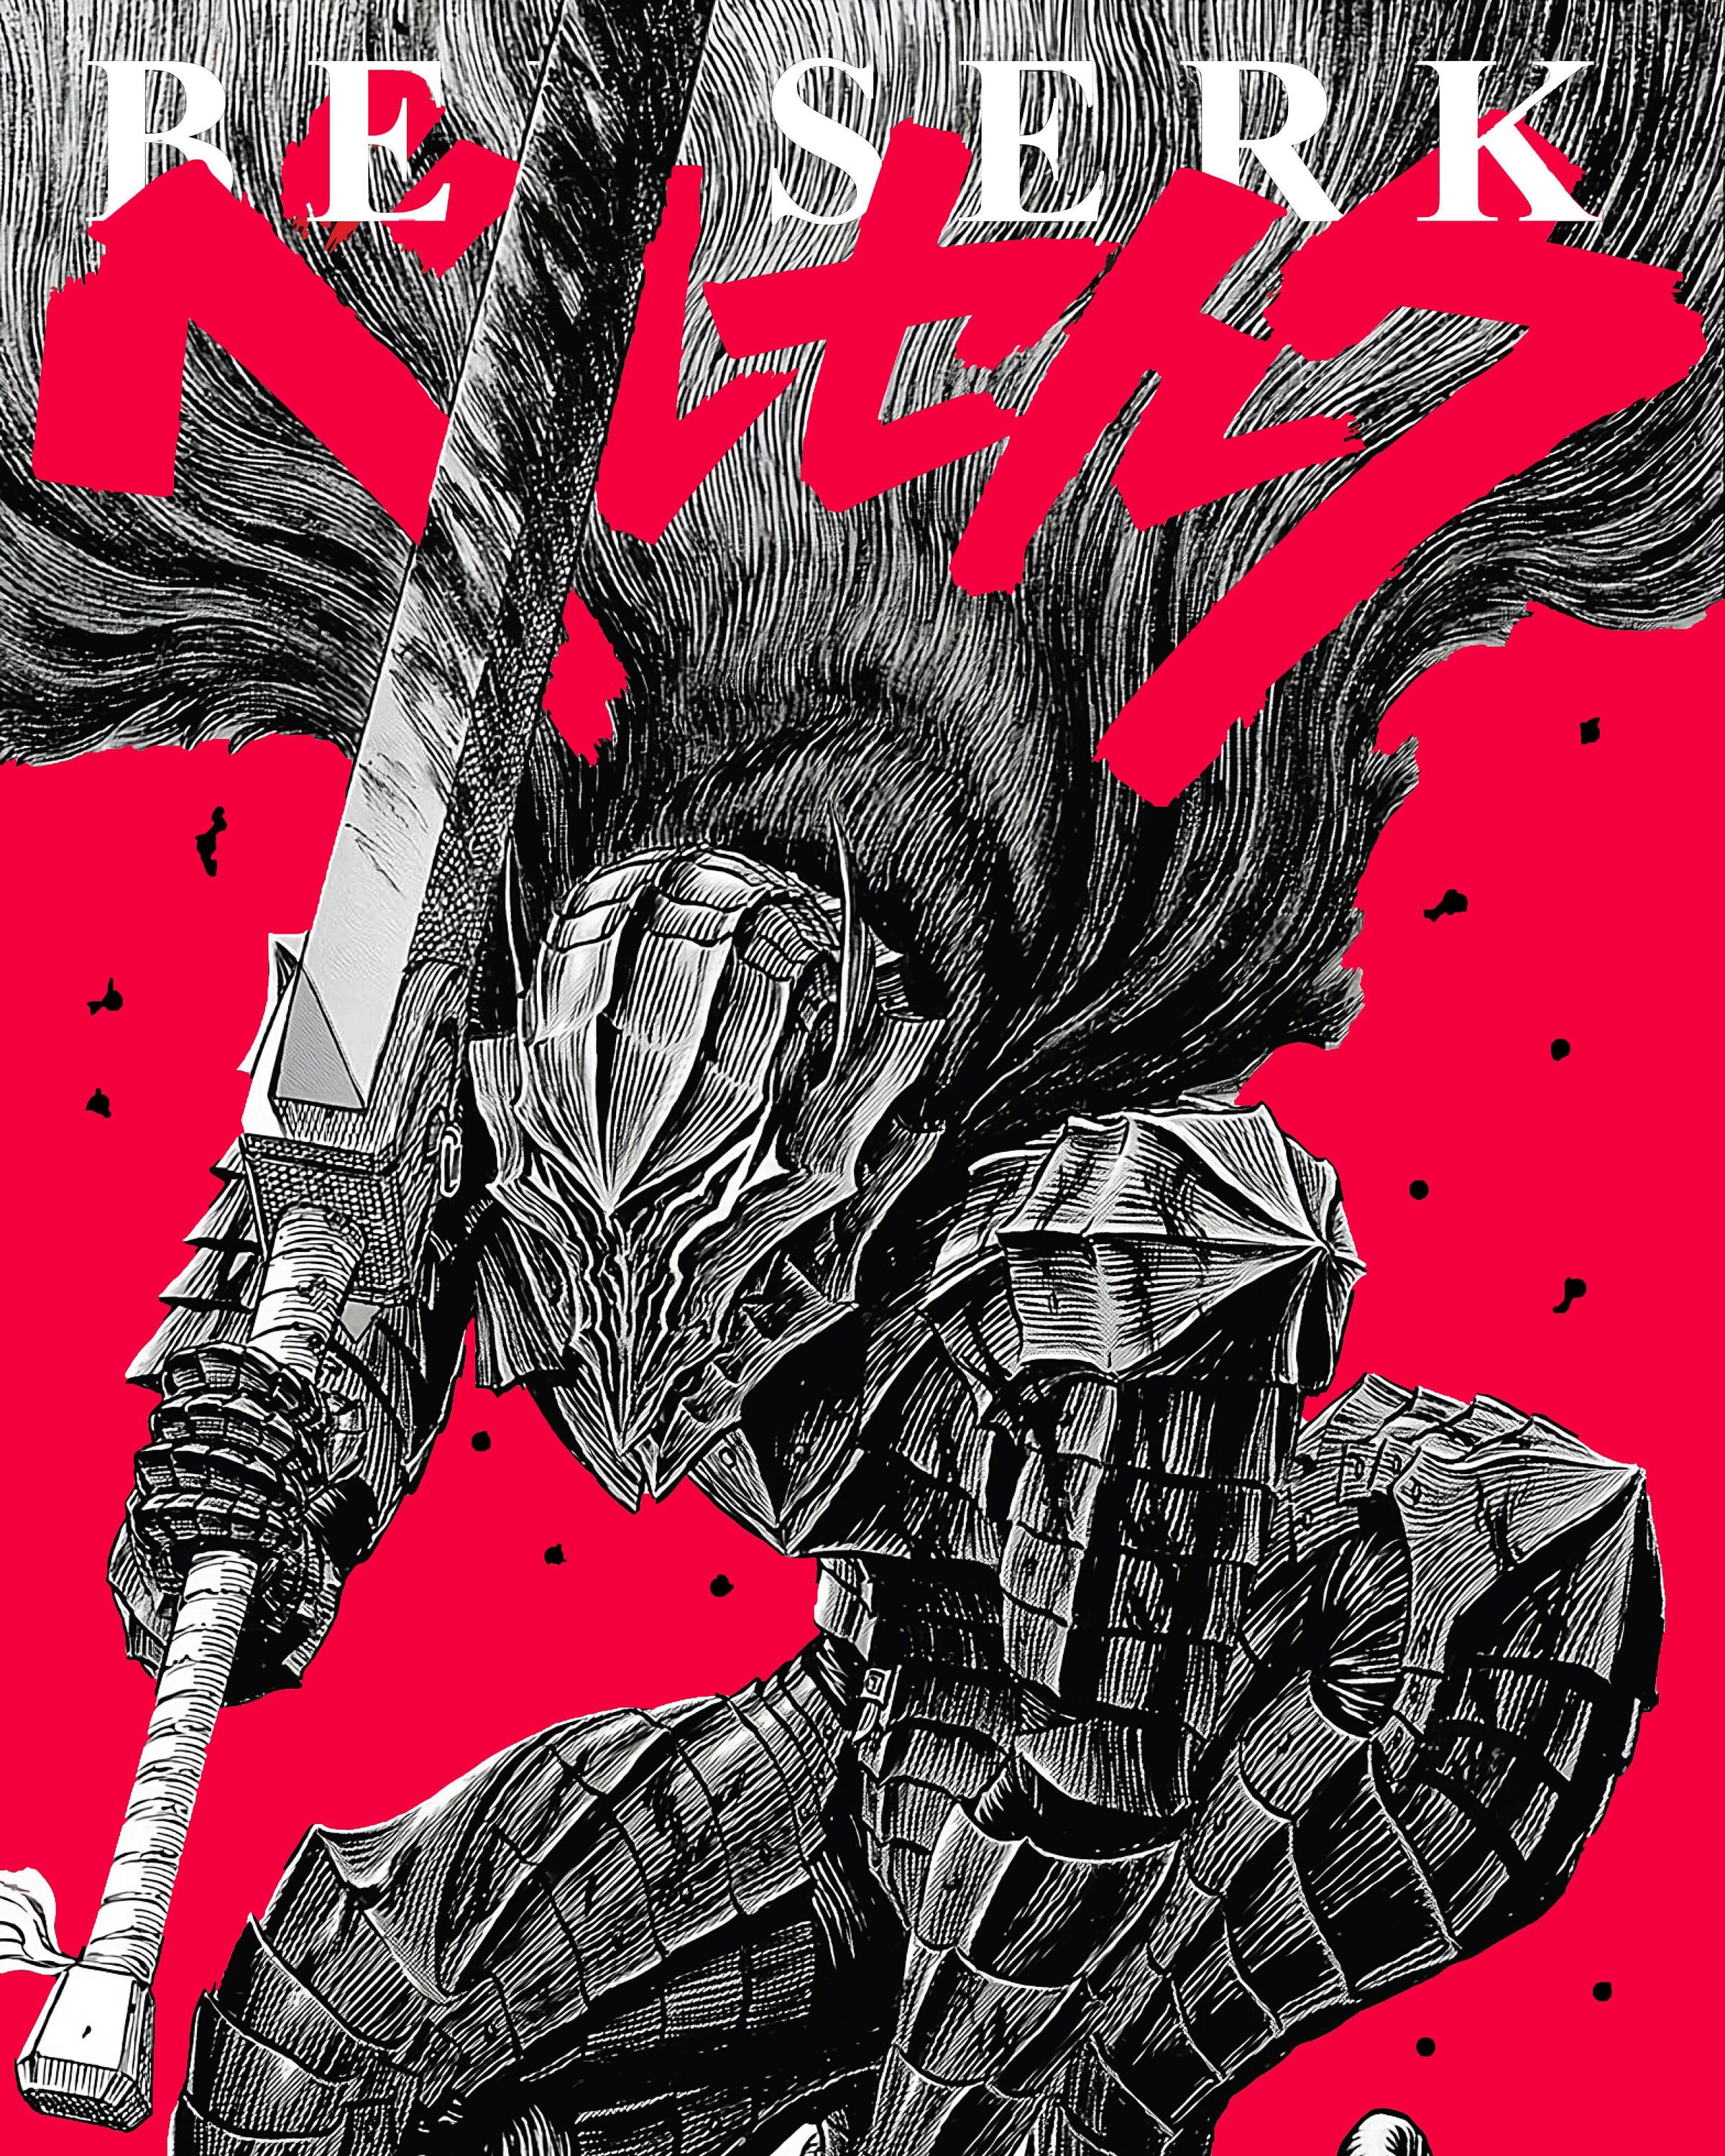 Pin by Hn Gvv on Berserk  Anime, Graphic poster, Manga art